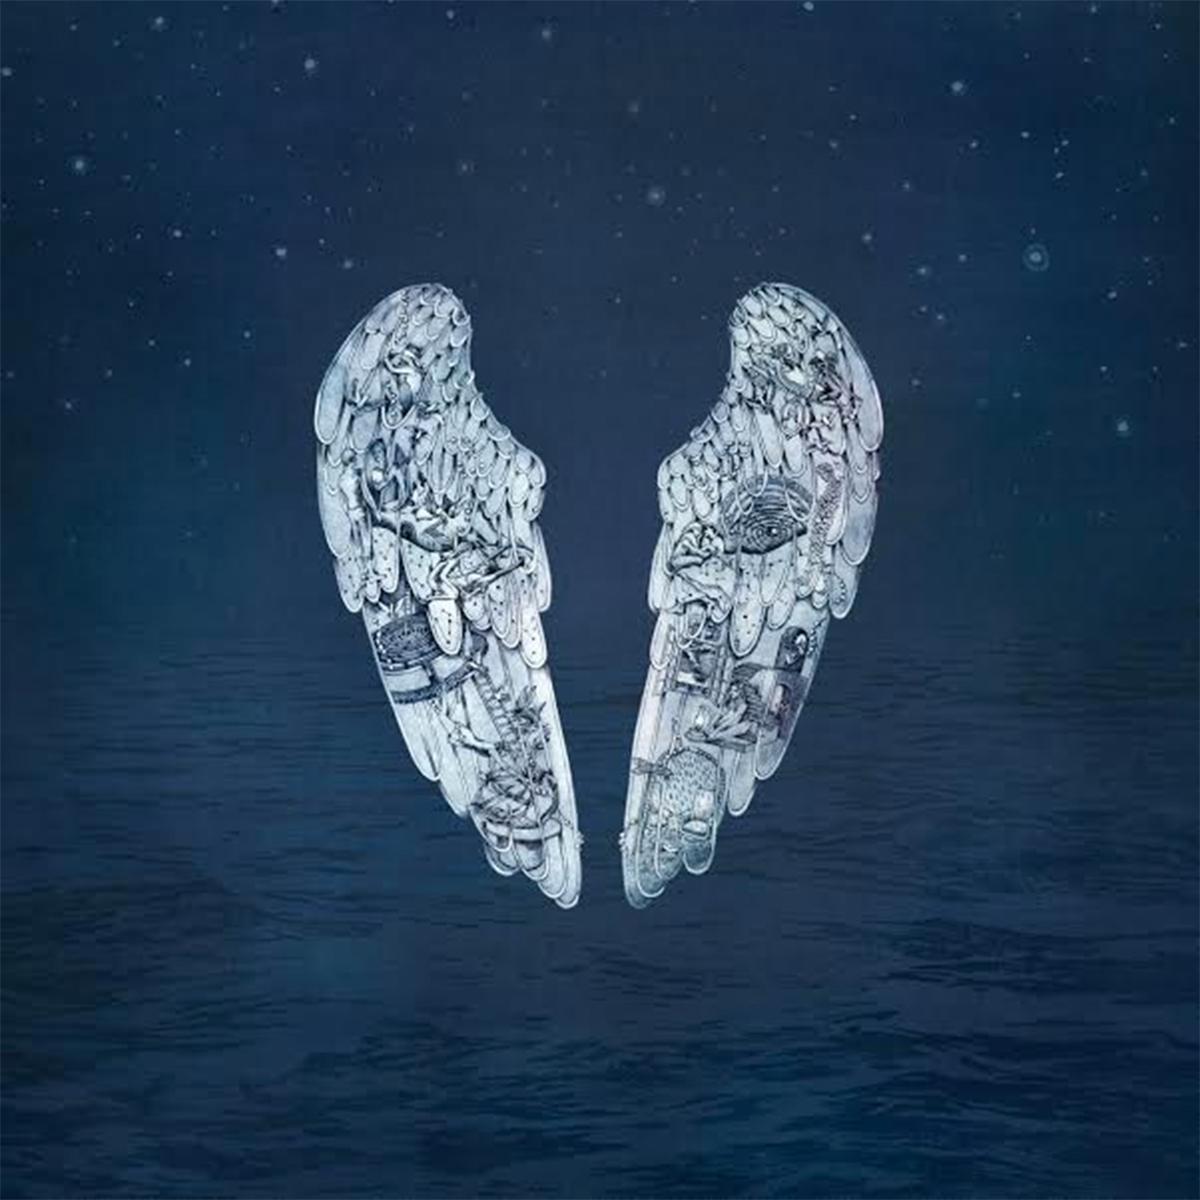 Coldplays nya album ”Ghost stories”.